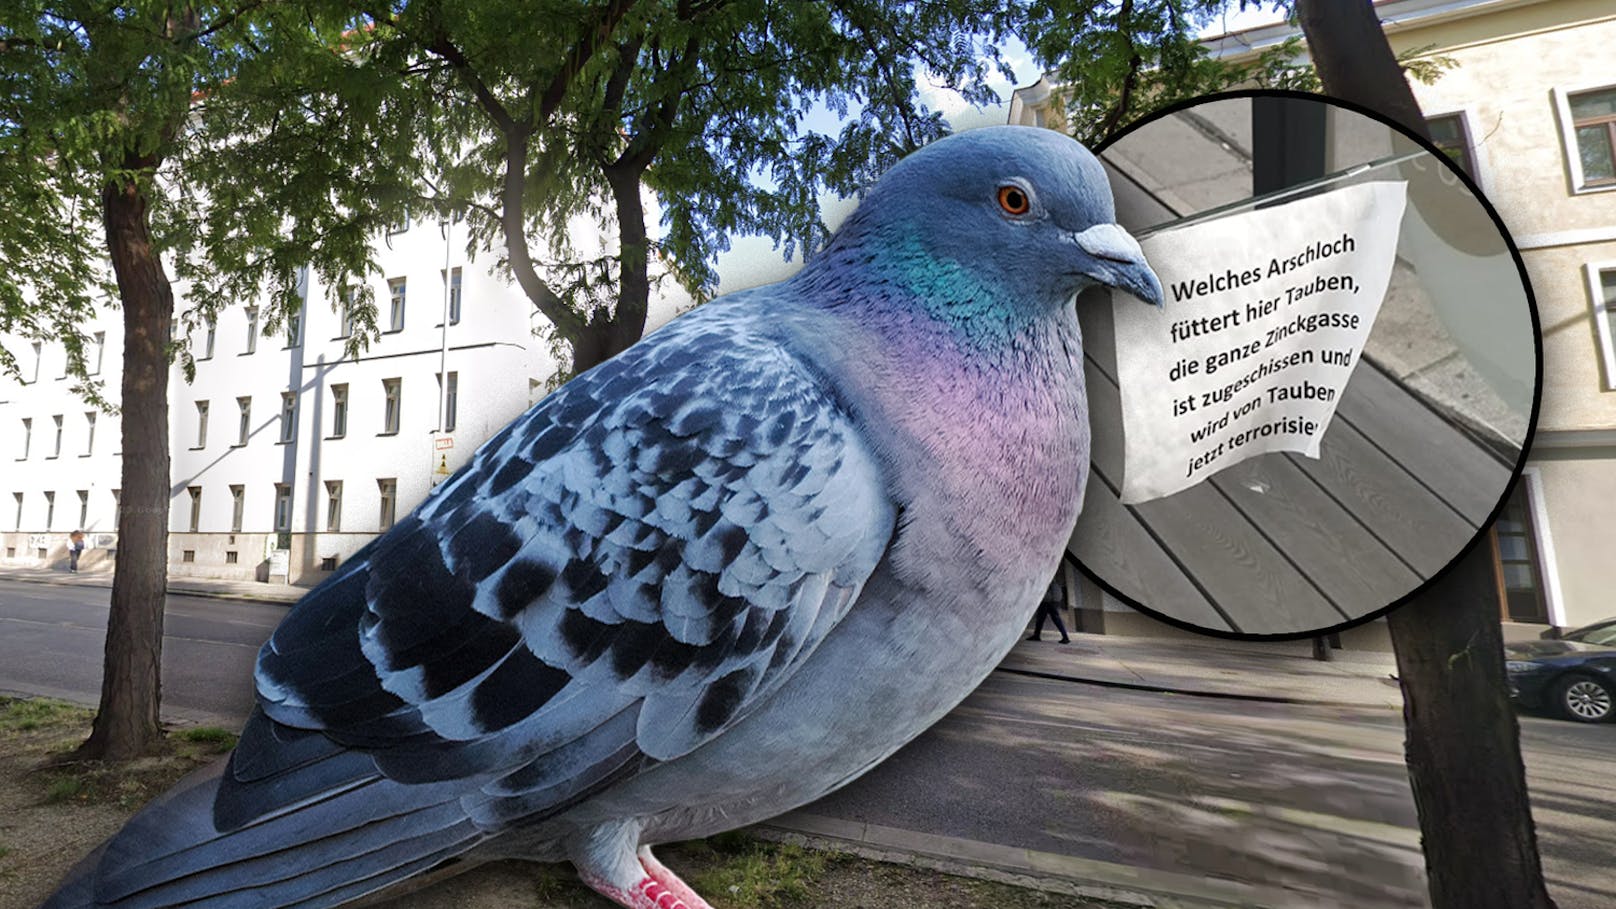 "Welches Ar***loch füttert Tauben?" – Große Wut in Wien